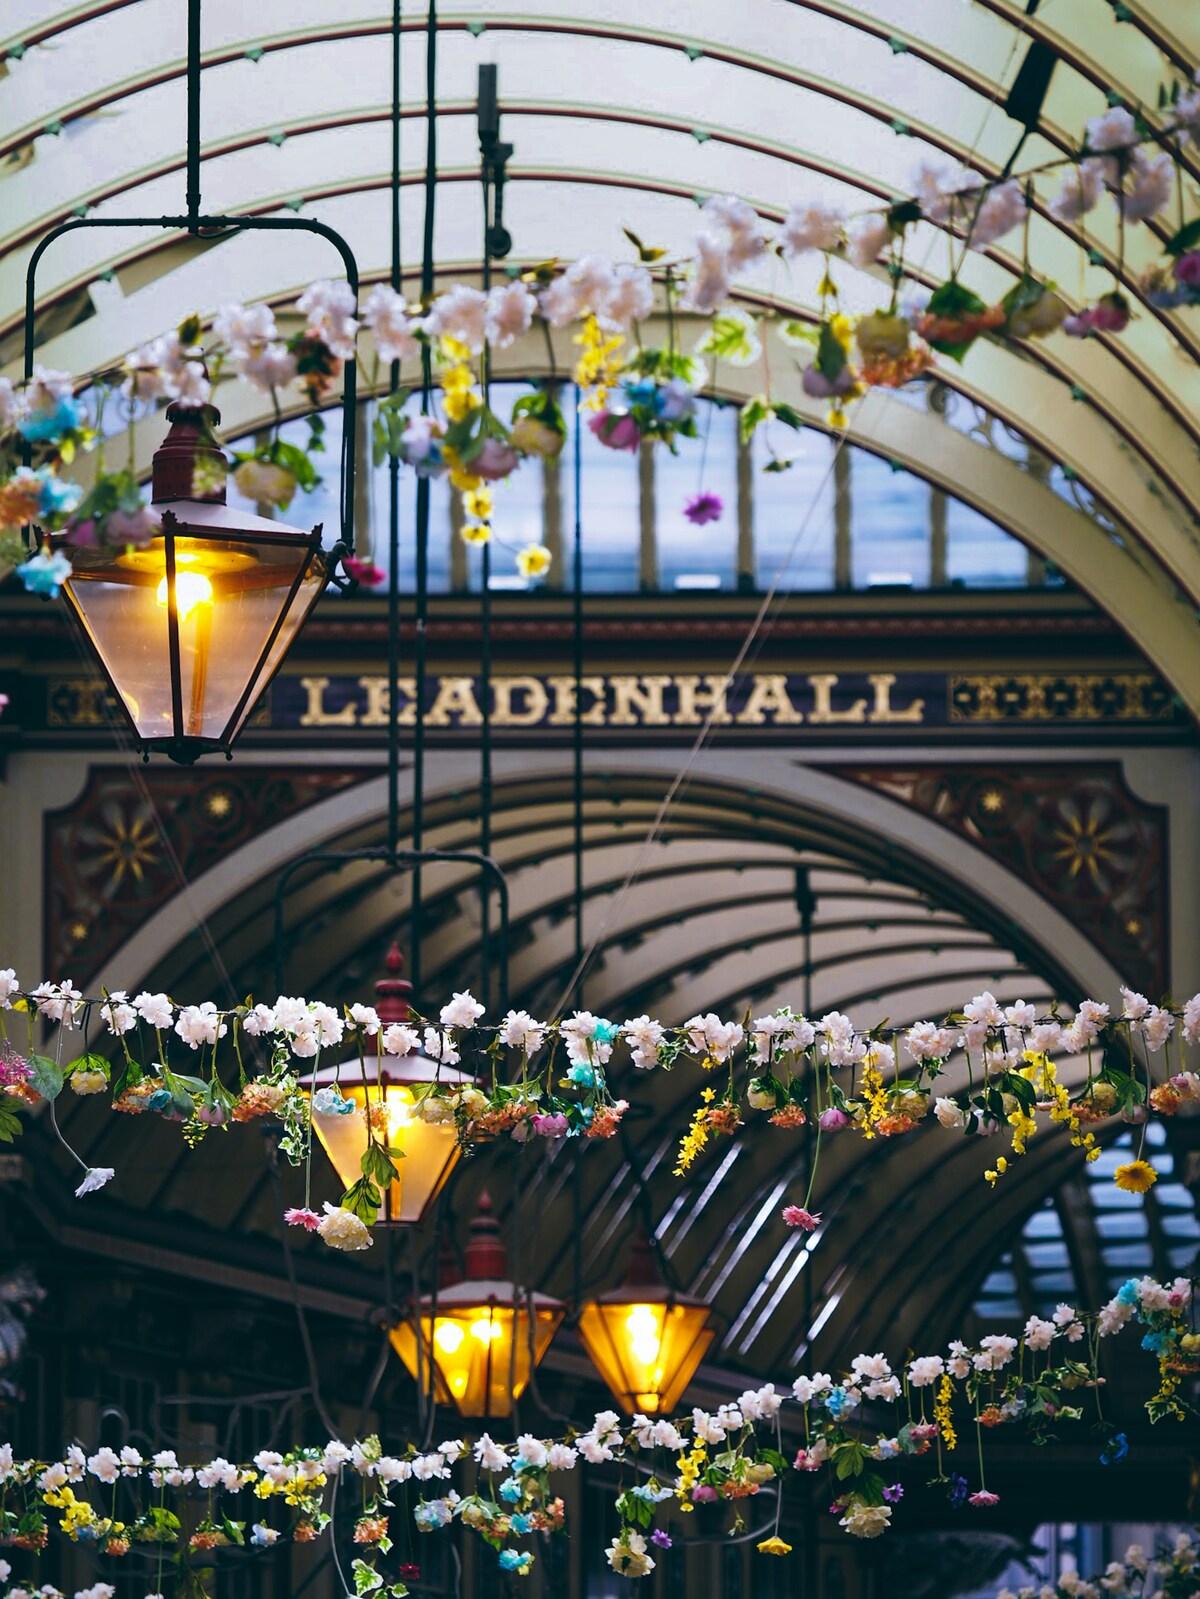 Image of Leadenhall Market by Team PhotoHound